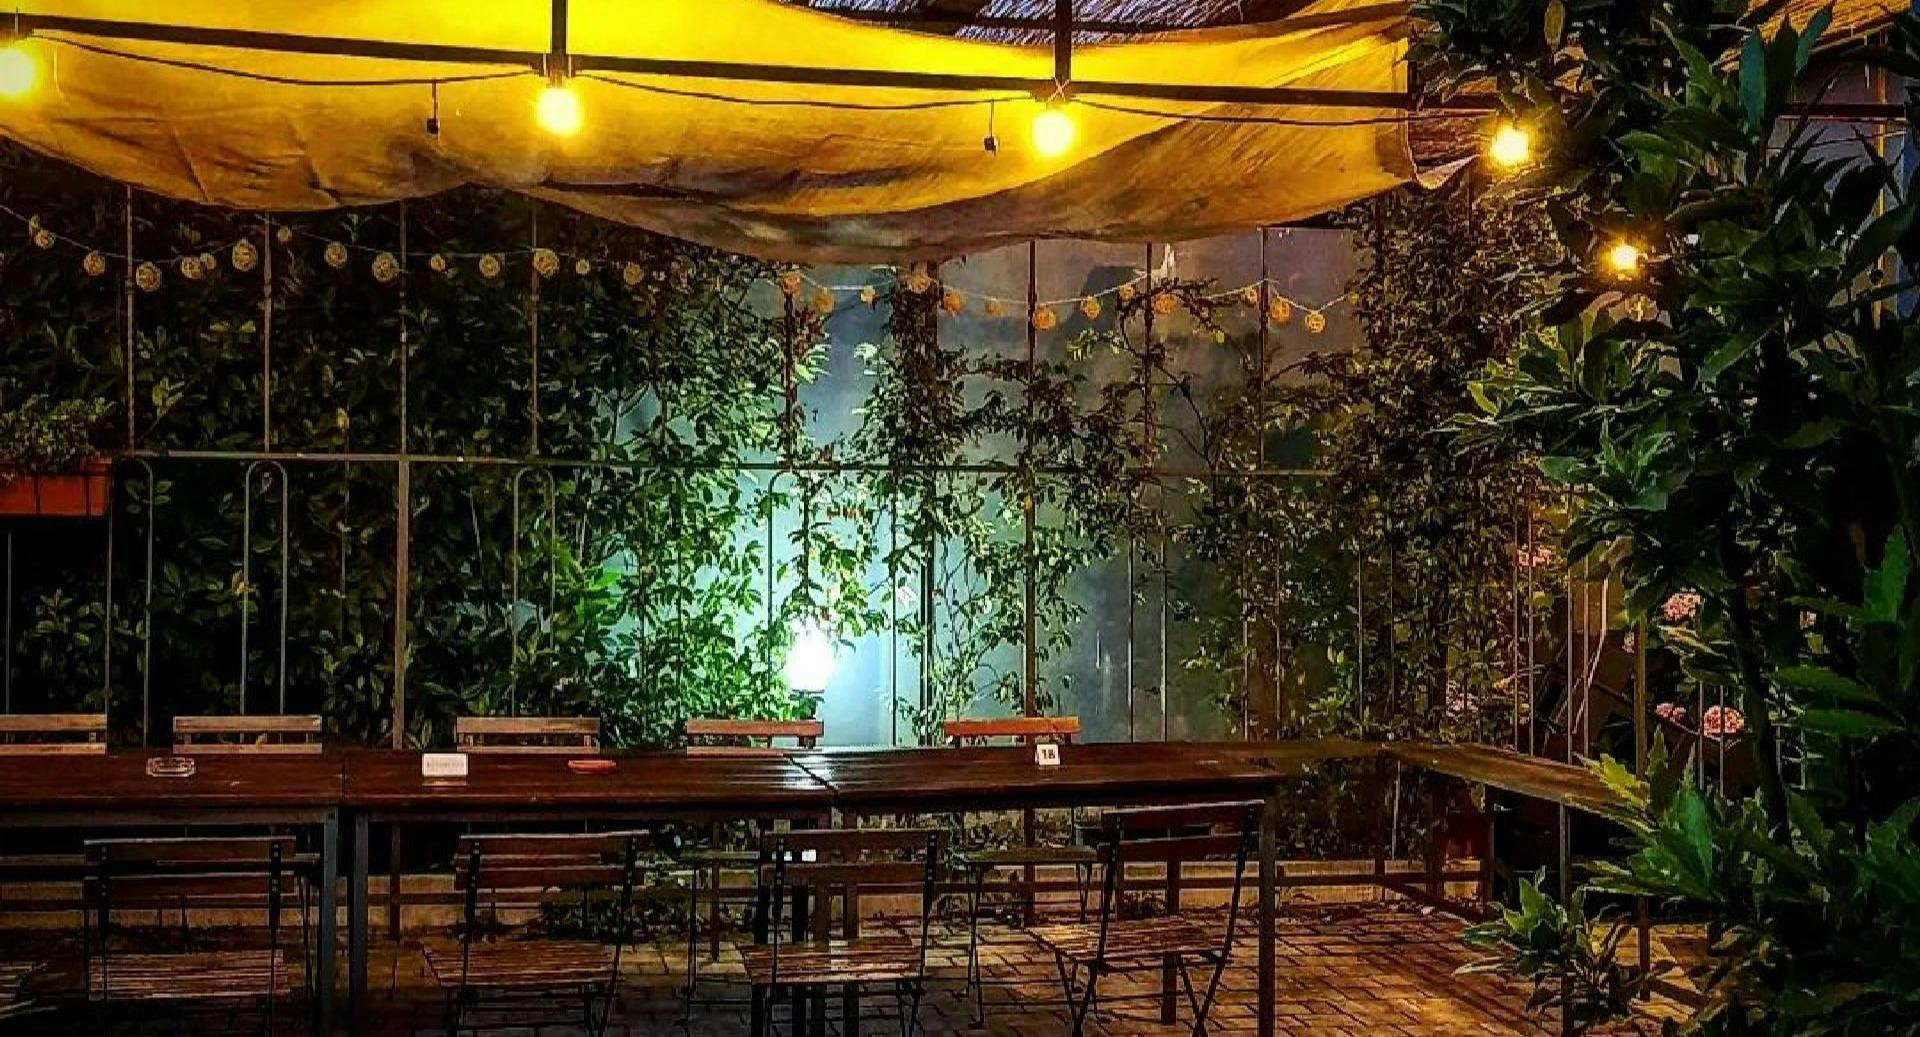 Photo of restaurant Magazzino Cocktail & Bistrot in Sesto San Giovanni, Milan